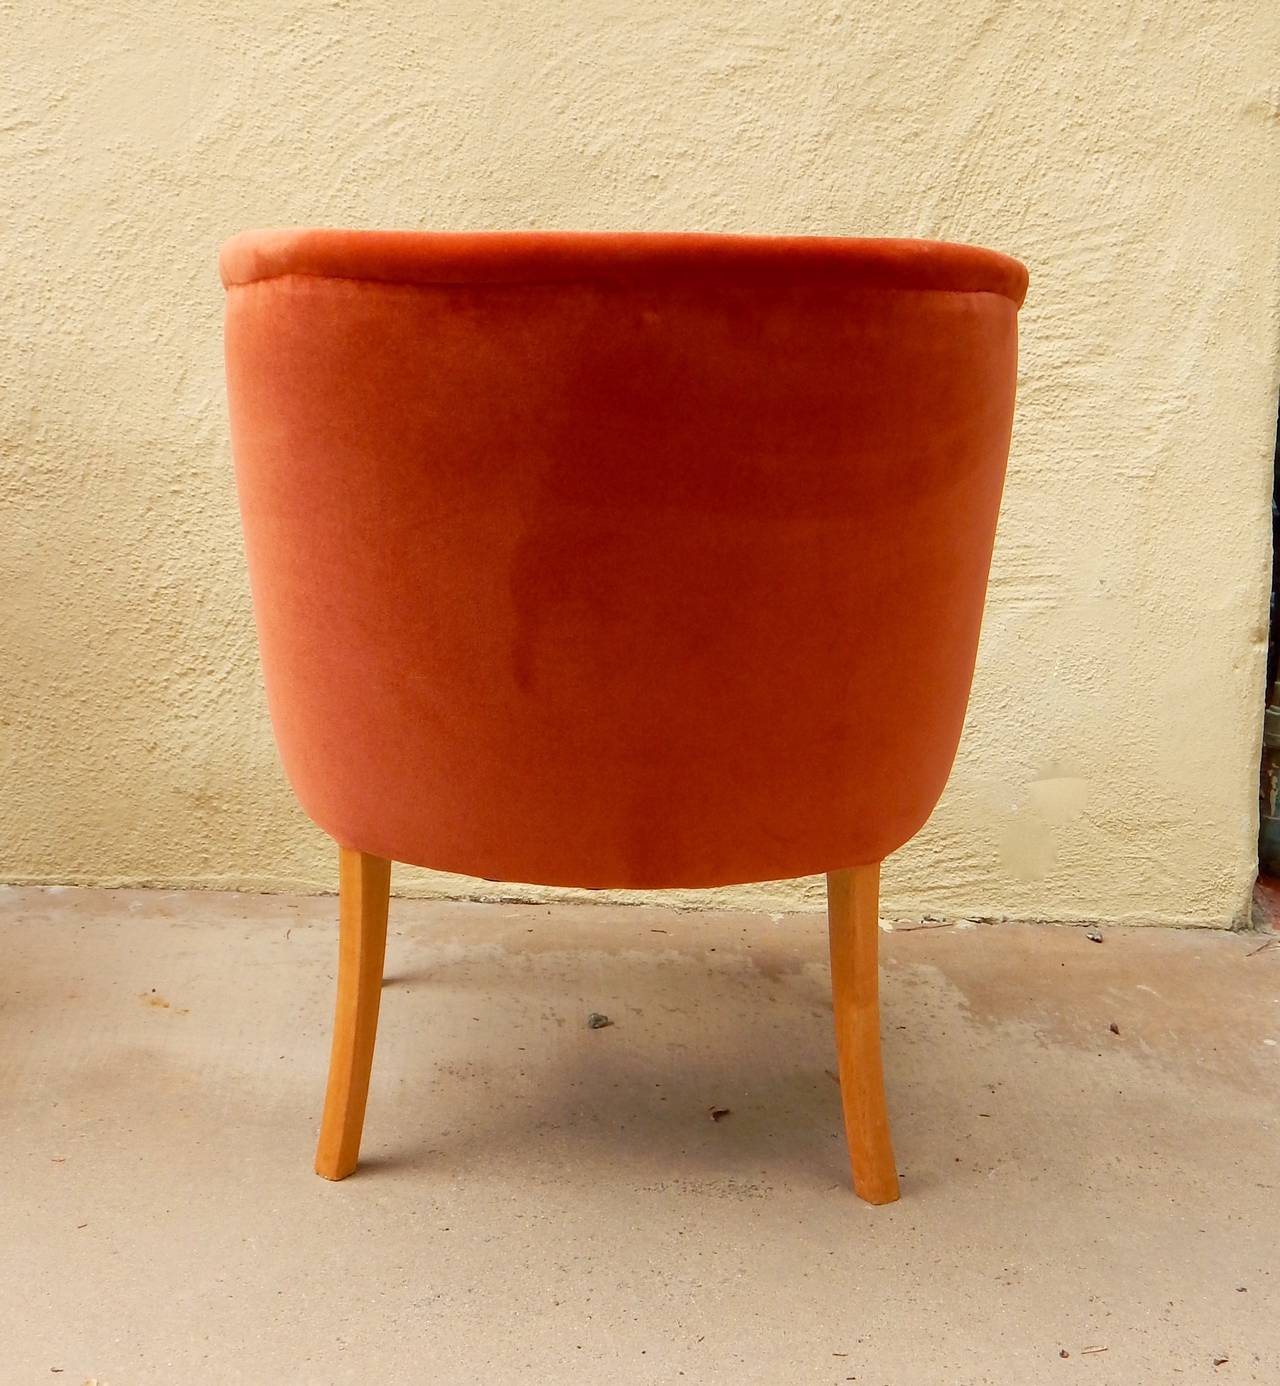 Pair of Swedish  upholstered chairs designed by Carl Malmsten for OH Sjögren in Tranås, Sweden ca. 1950. Solid birch under fabric. Legs in golden flame birchwood. Restored and upholstered in burnt orange velvet. 